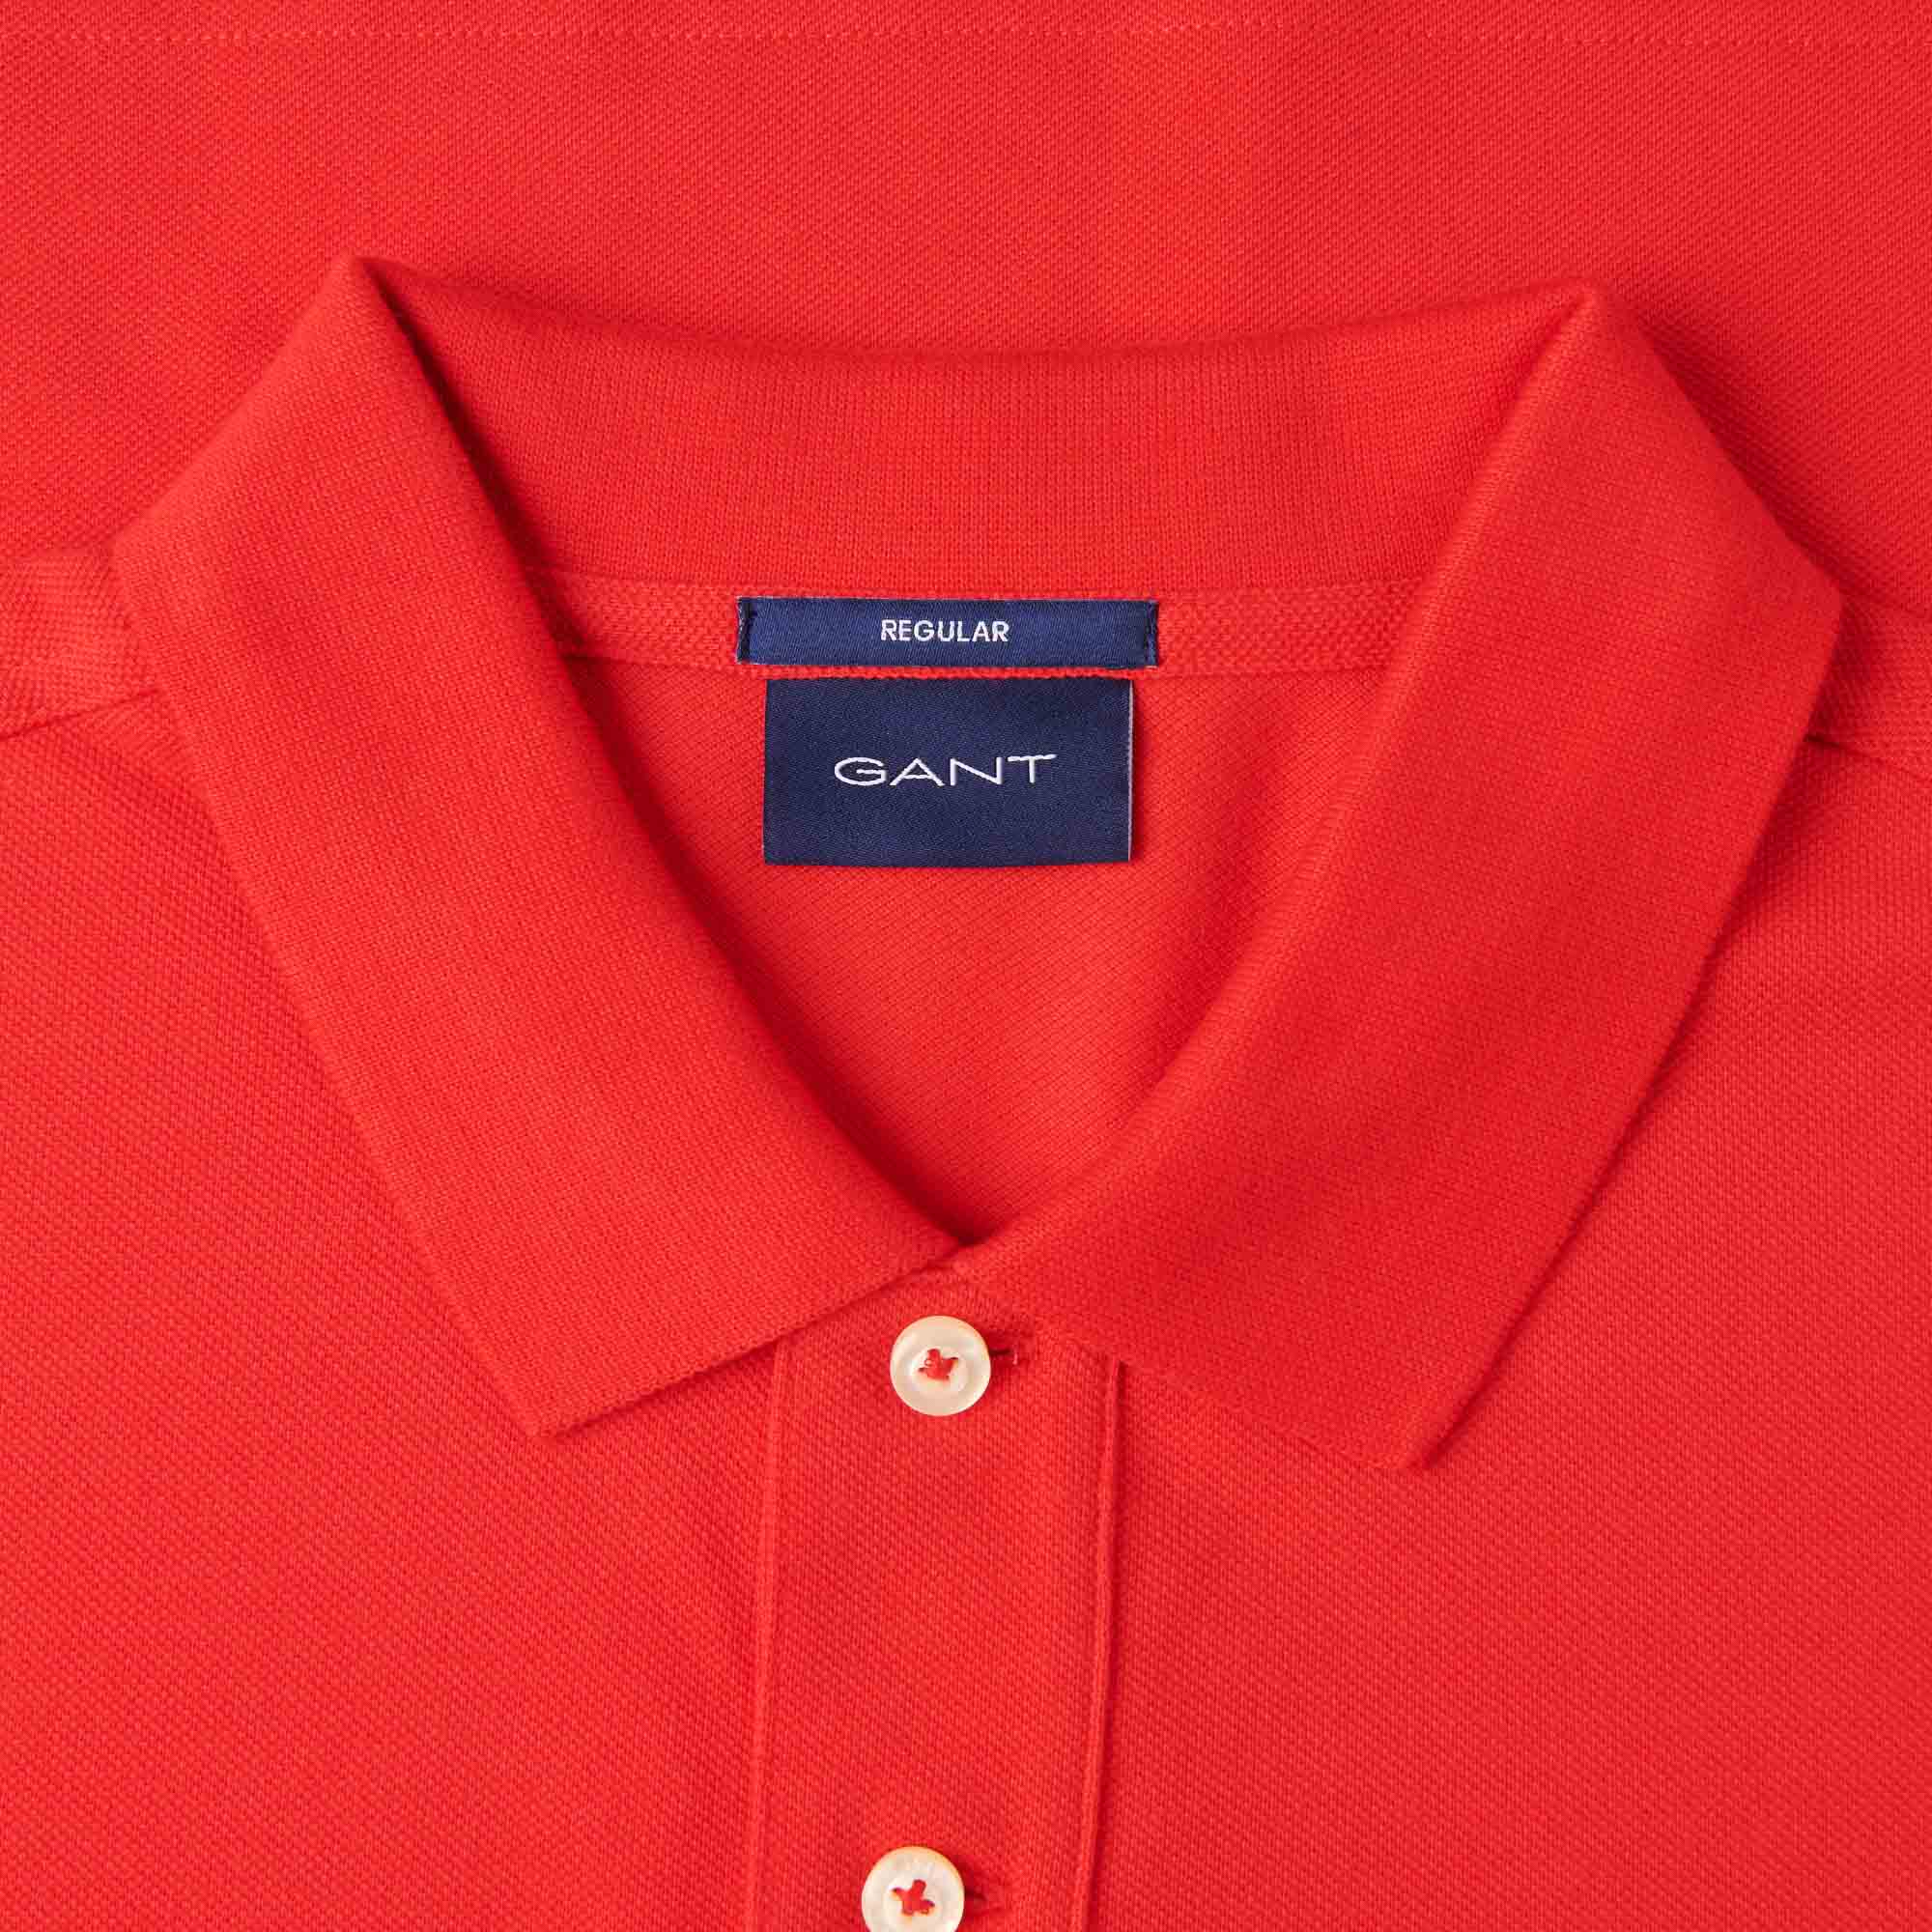 Bright Pennyroyal - Shirt Sports Original Red GANT Polo -